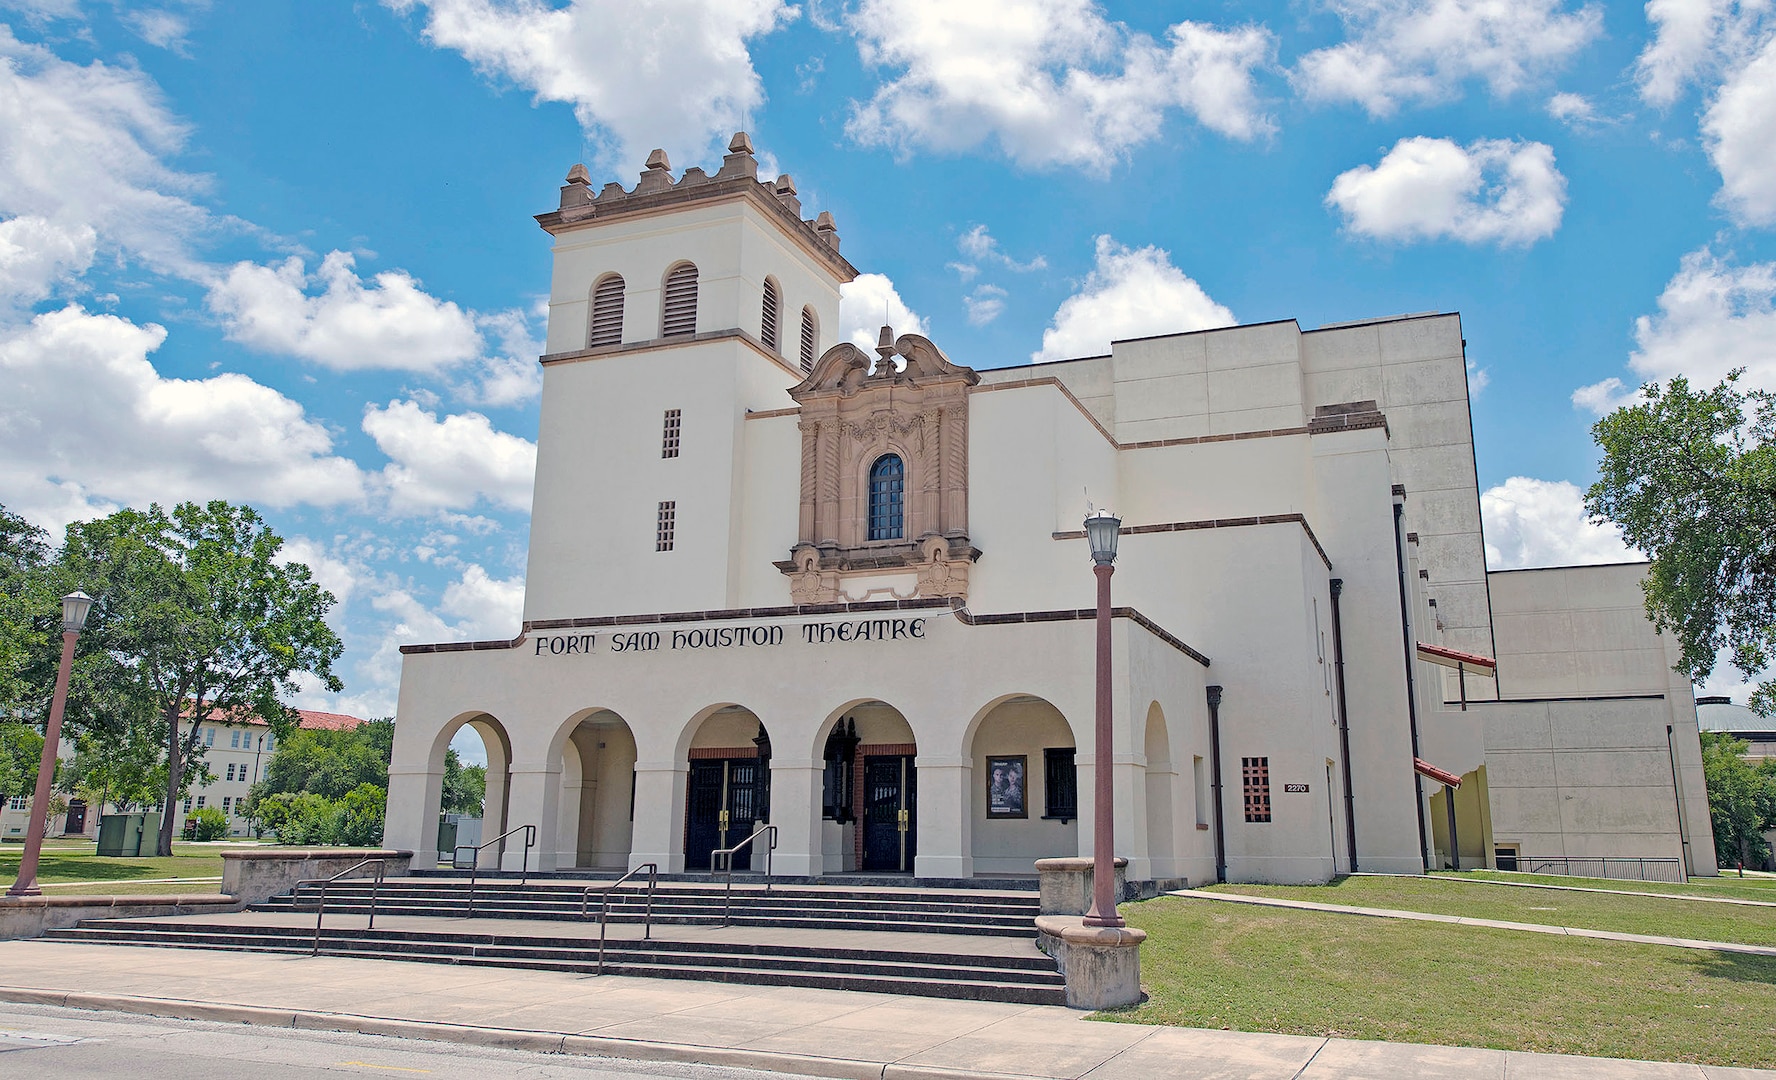 Historic Fort Sam Houston Theatre marks 85th anniversary > Joint Base